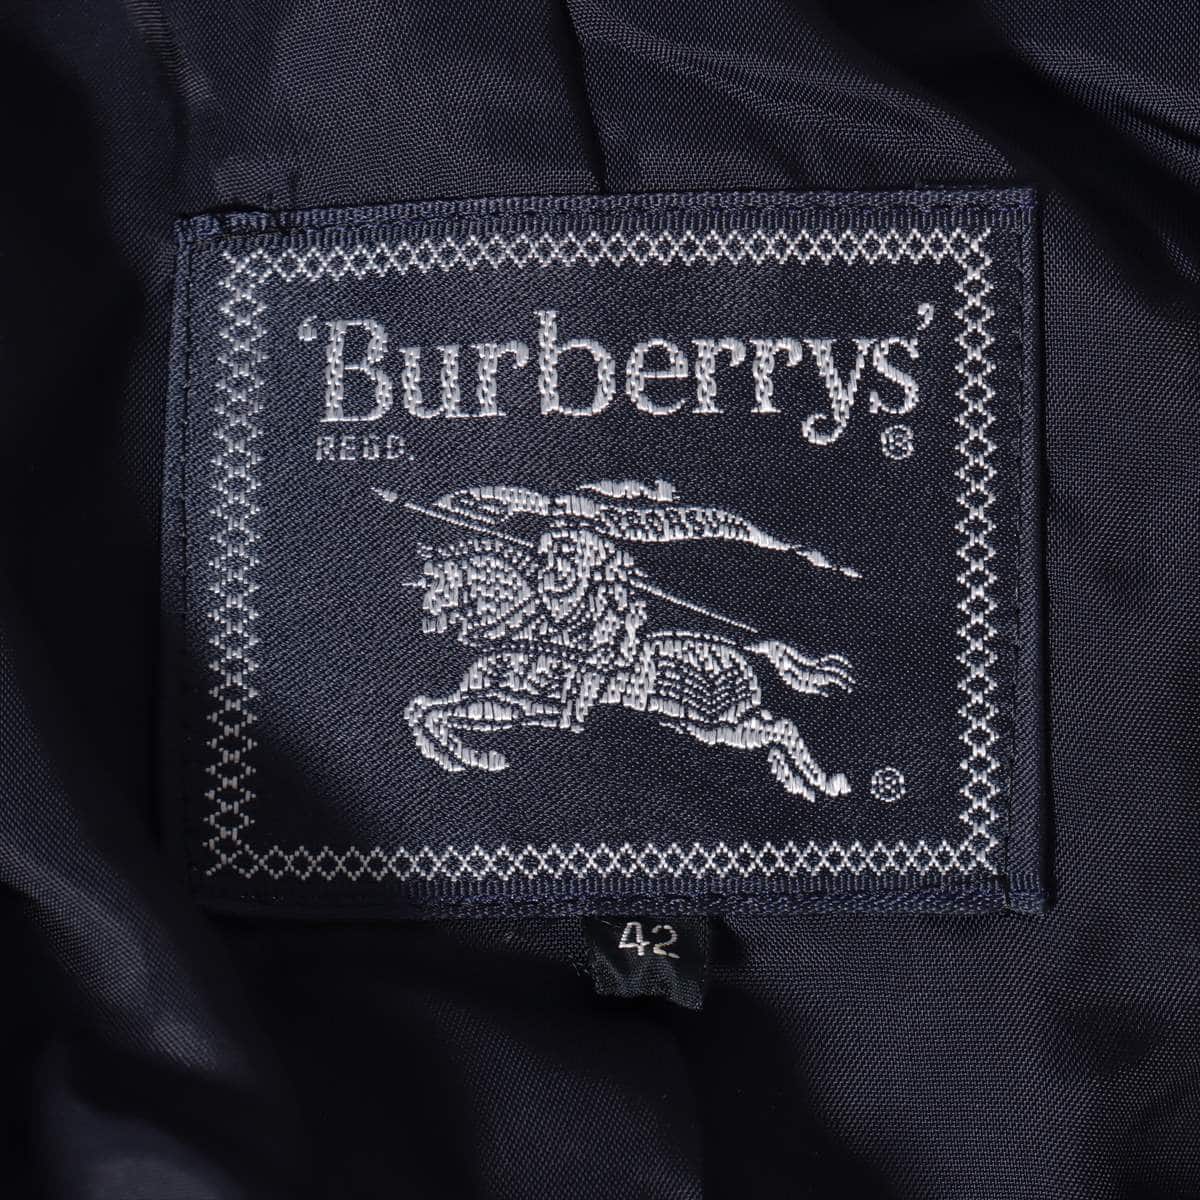 Burberrys wool x rayon Setup jacket 42/skirt 40 Ladies' Green  plaid